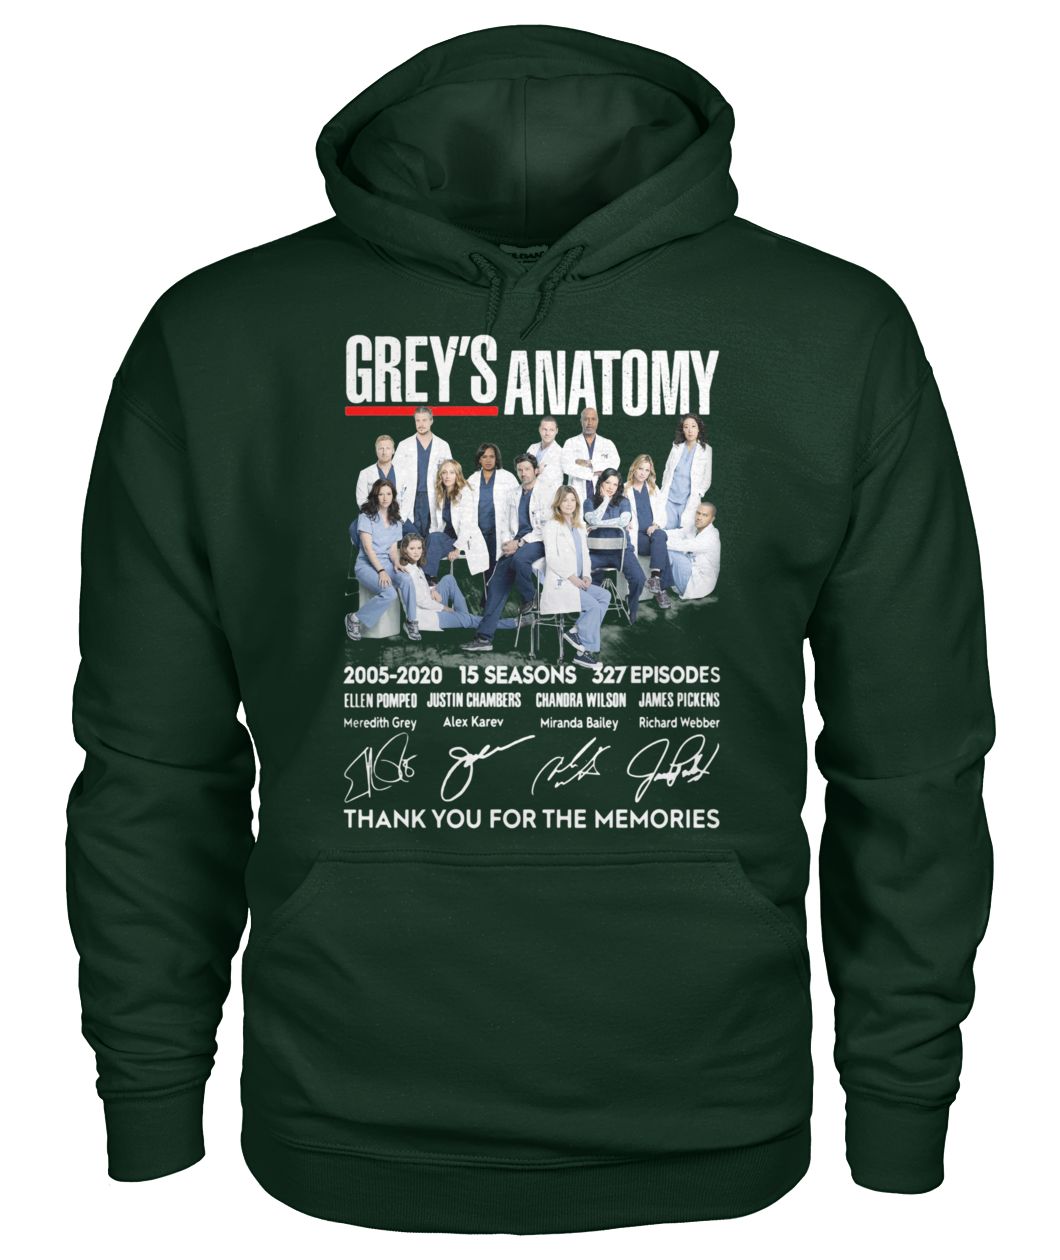 Grey's anatomy 2005-2020 15 seasons 327 episode thank you for the memories signatures gildan hoodie